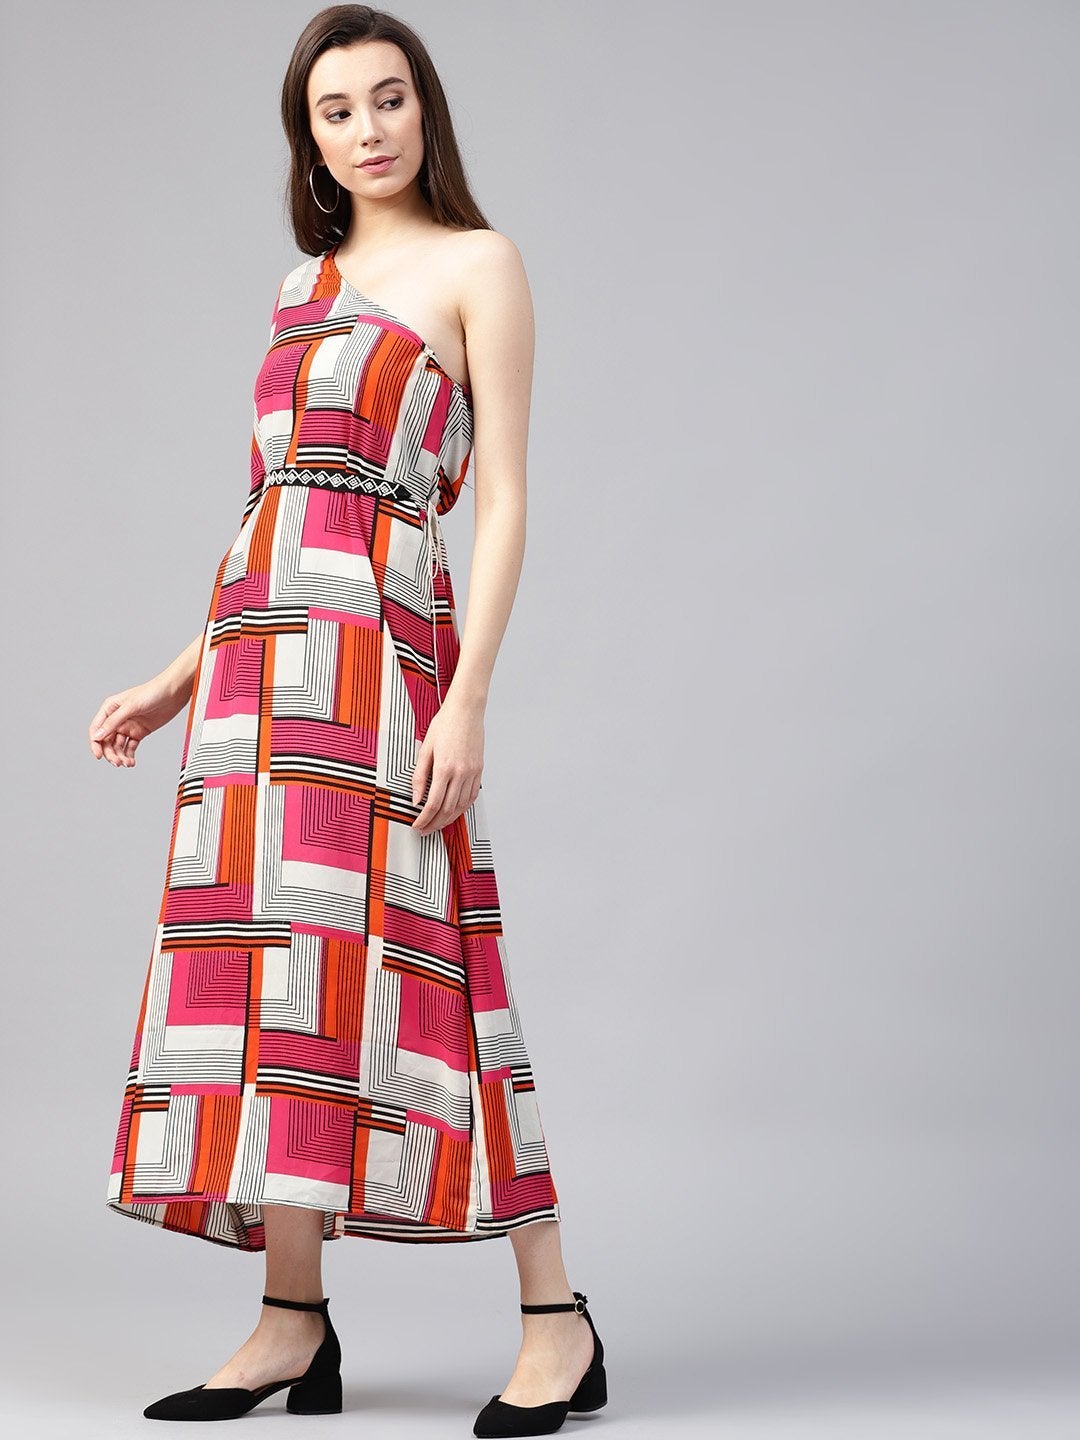 Women's Bohemian One-Shoulder Printed Dress - Pannkh